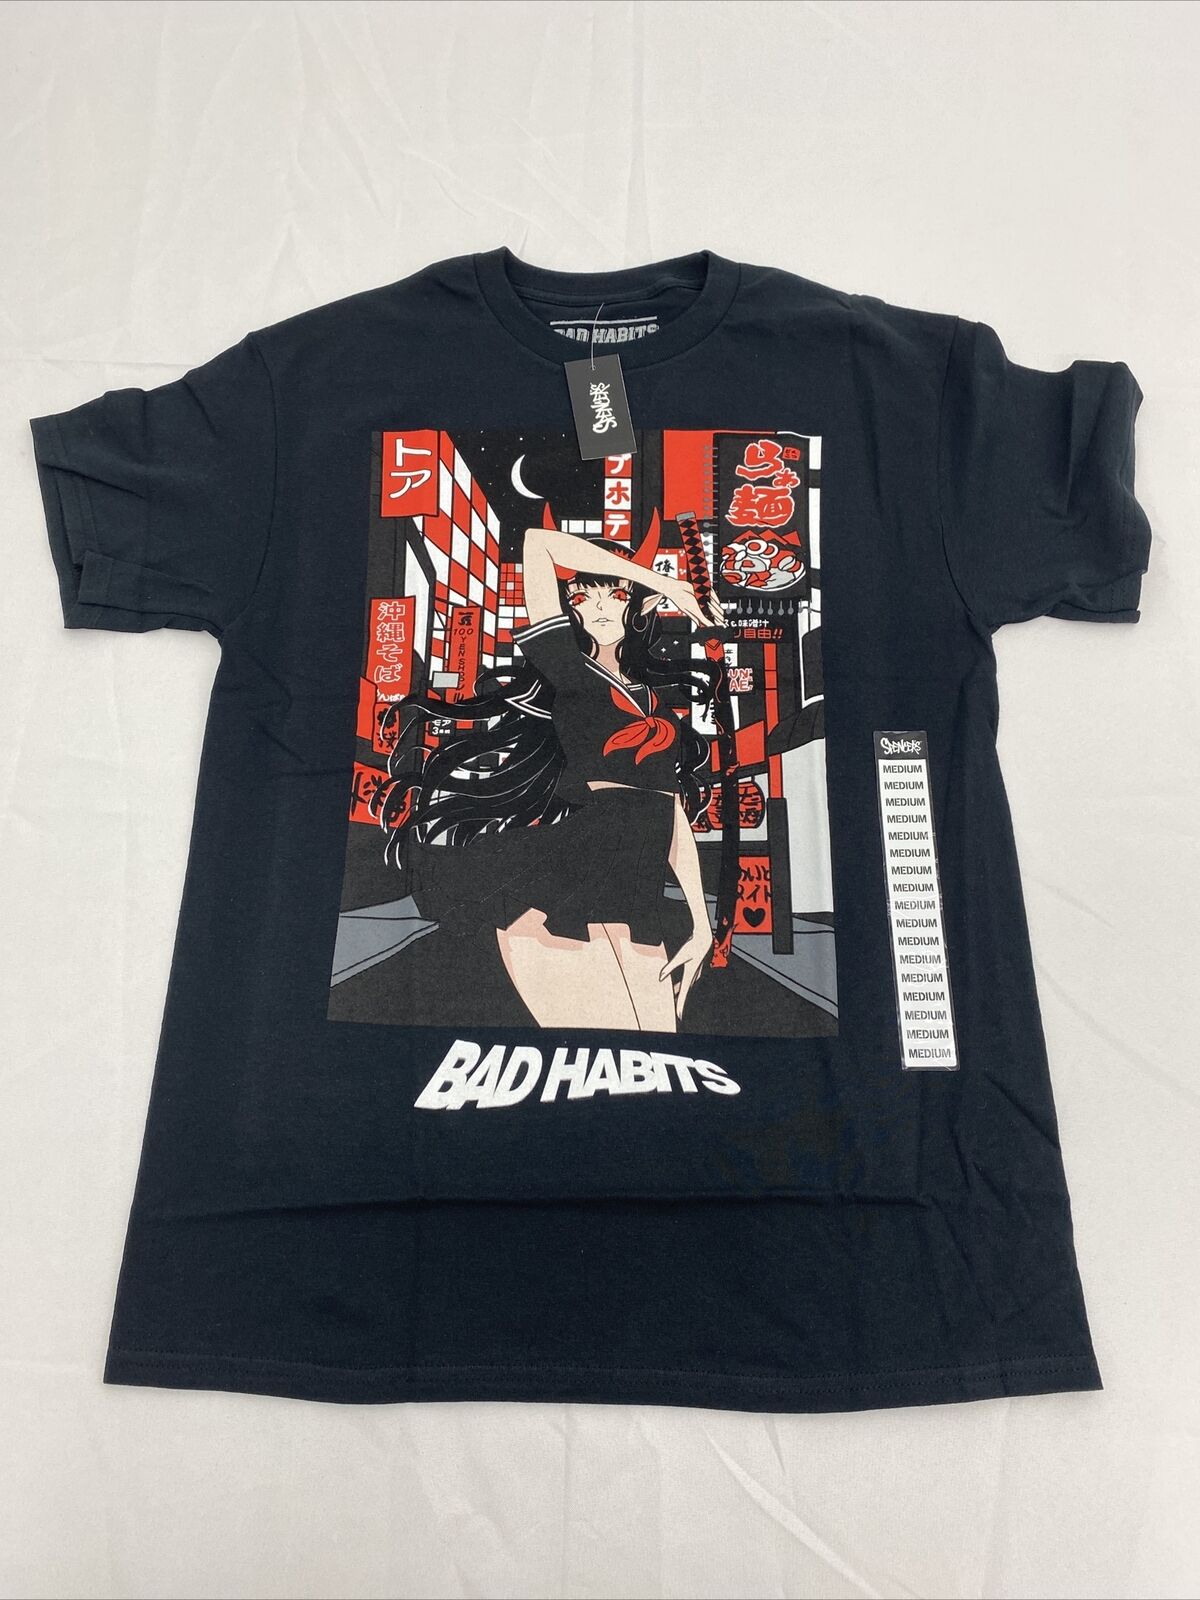 Spencer's Bleach Aizen Anime Graphic T-shirt in Black, Size Medium | eBay